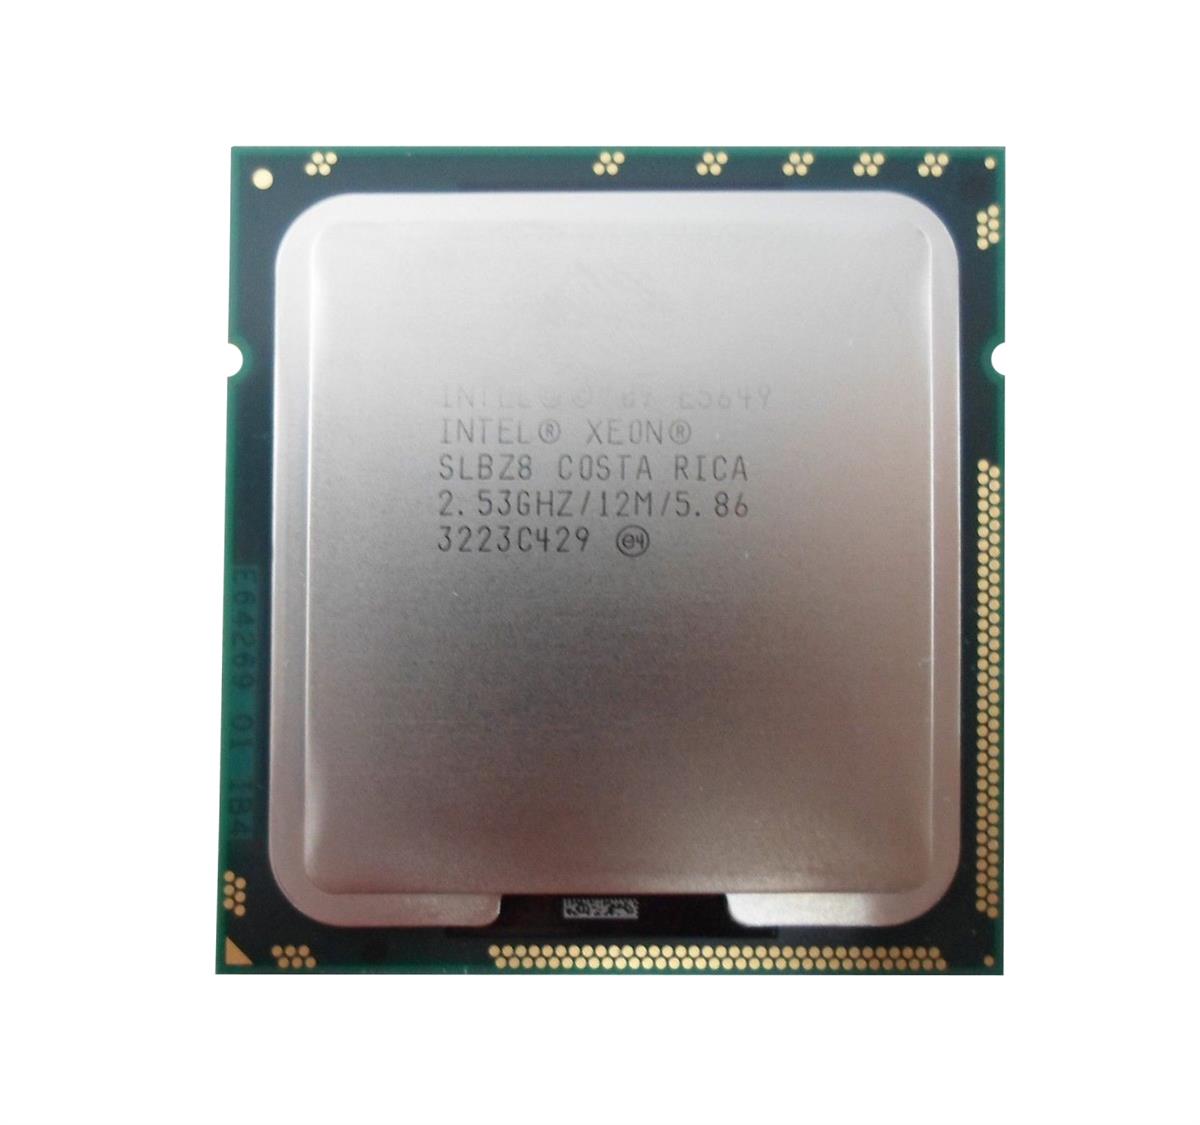 E56491 Intel Xeon 6 Core E5649 2.53GHz 5.86GT/s QPI 12MB L3 Cache Socket FCLGA1366 Processor